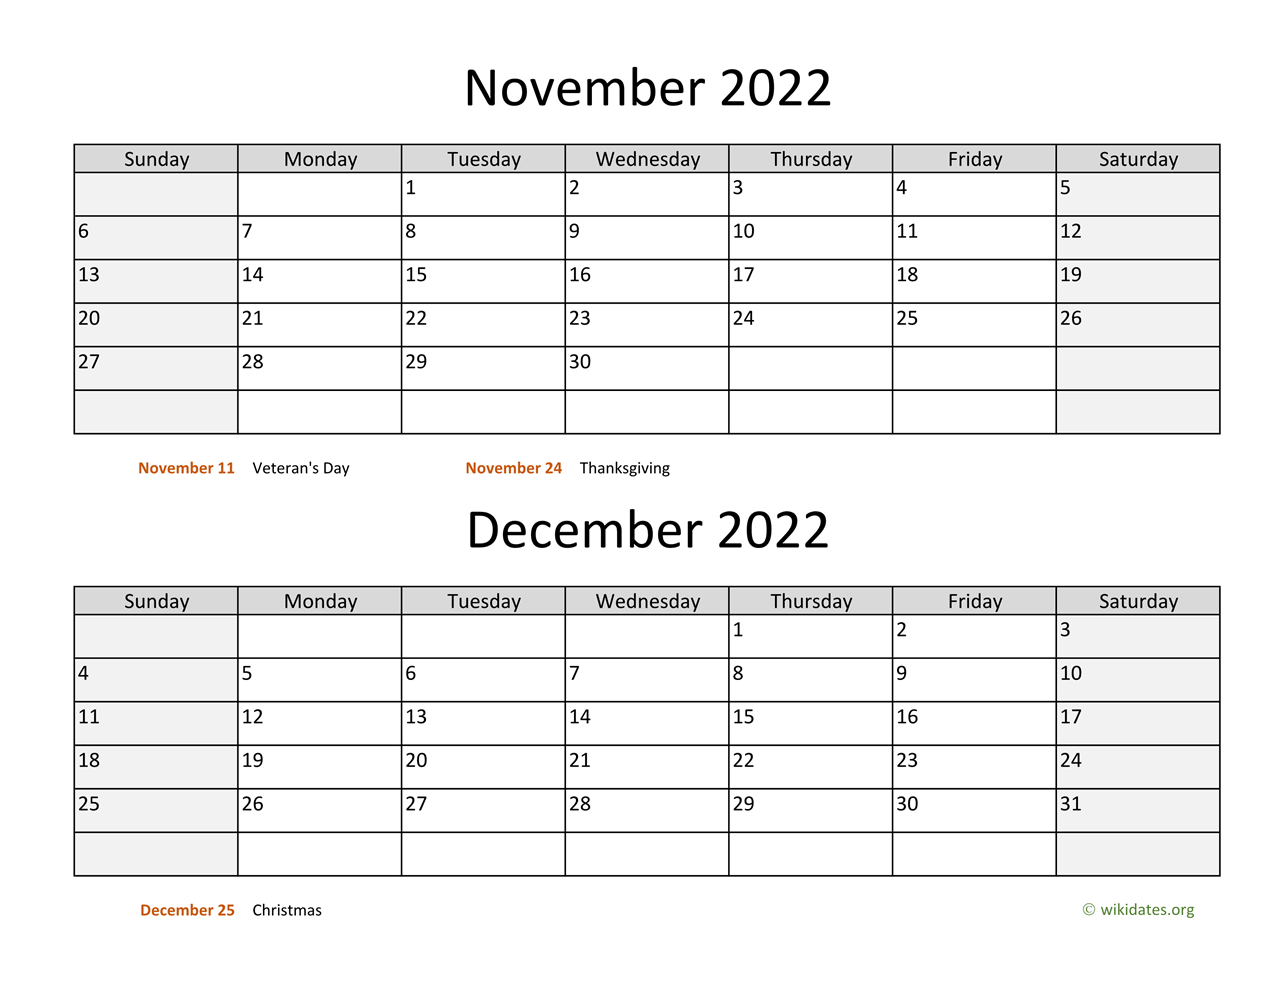 November December Calendar 2022 November And December 2022 Calendar | Wikidates.org